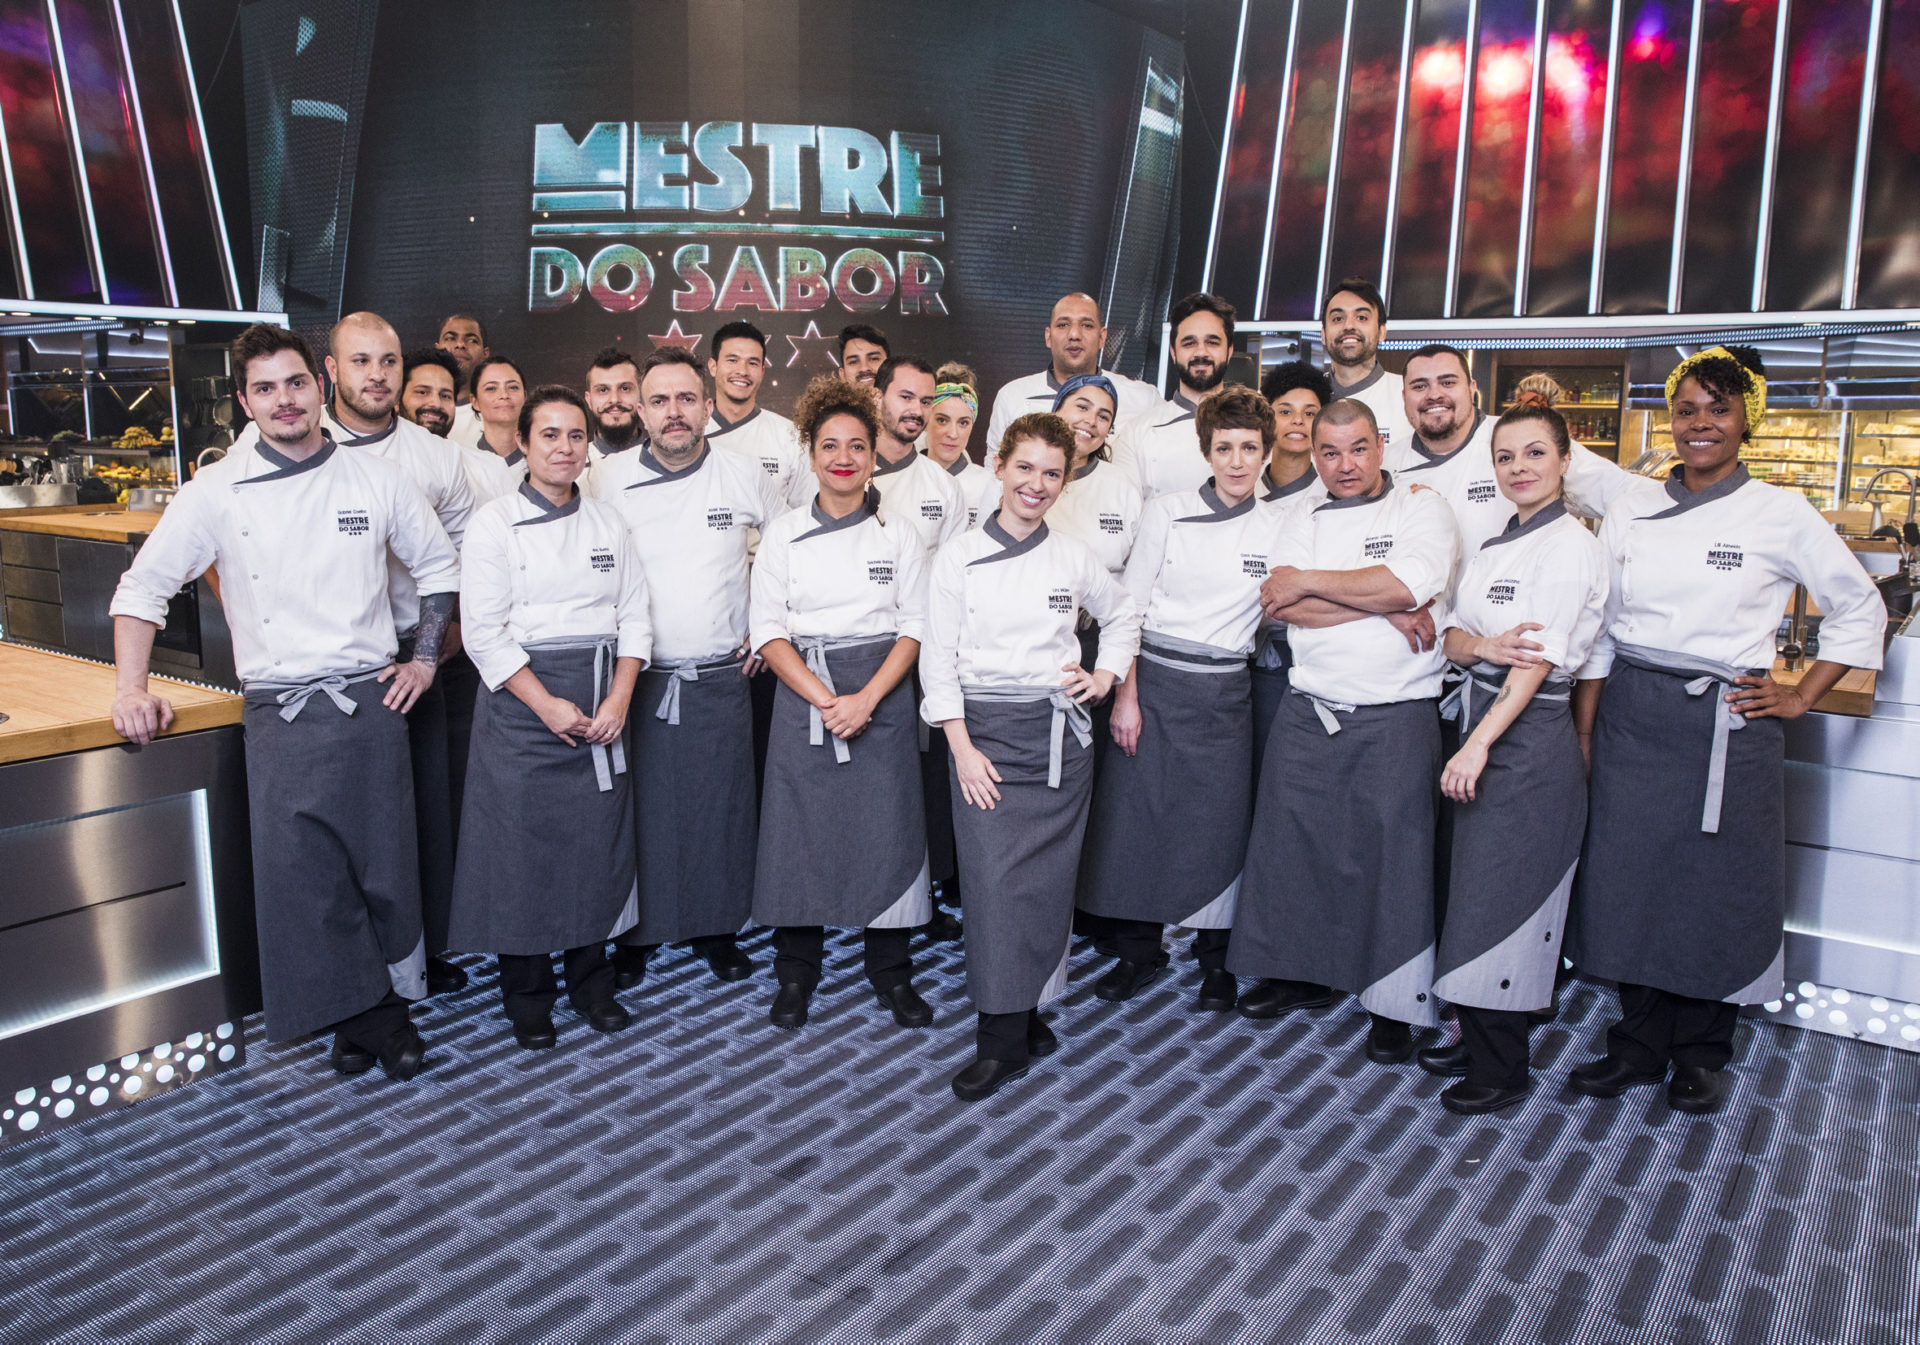 Os 24 chefs competidores de Mestre do Sabor